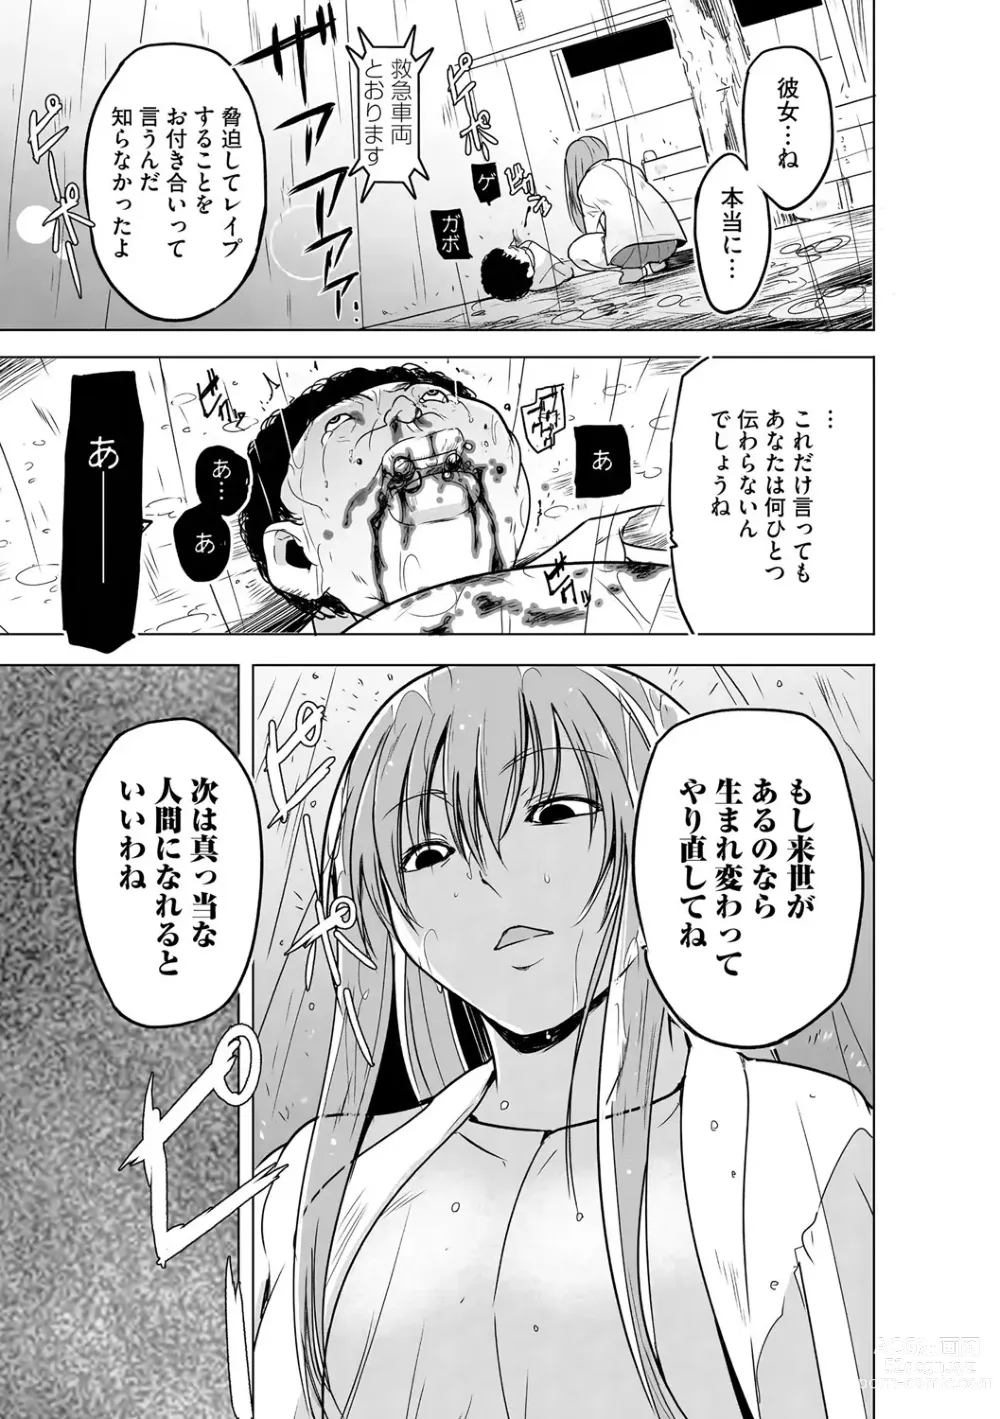 Page 343 of manga Cyberia Plus Vol. 19